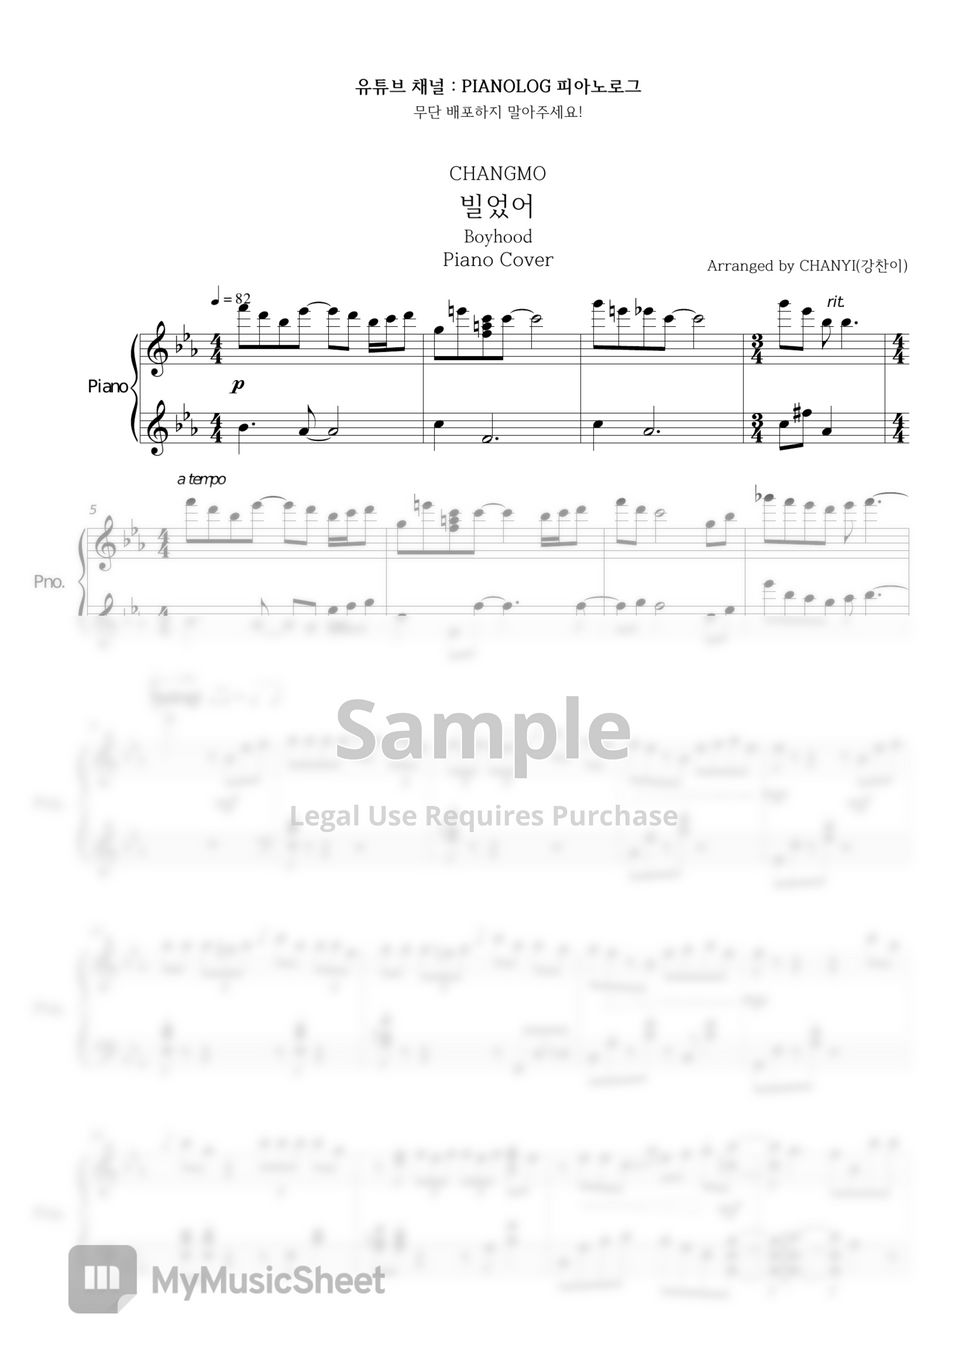 CHANGMO - Wish (빌었어) Sheets by Pianolog